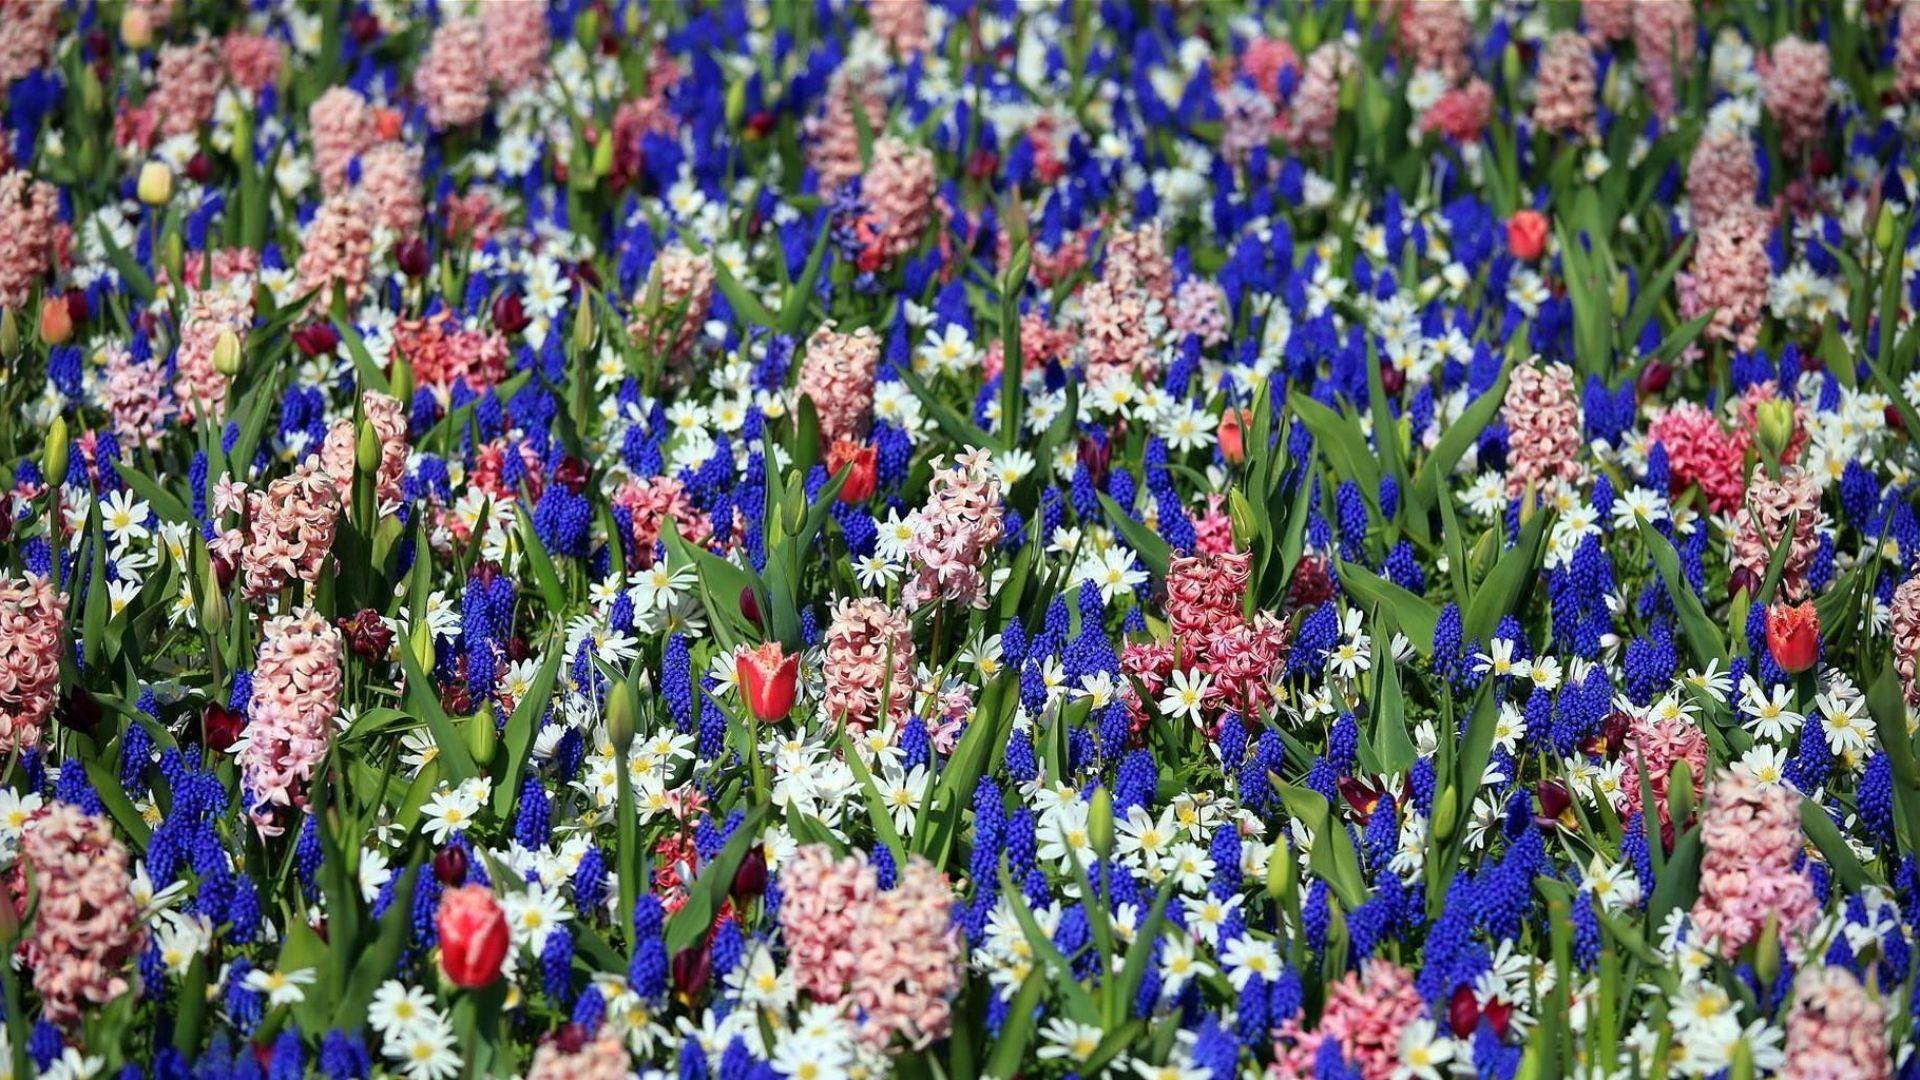 Download Wallpaper 1920x1080 tulips, muscari, hyacinths, flowers